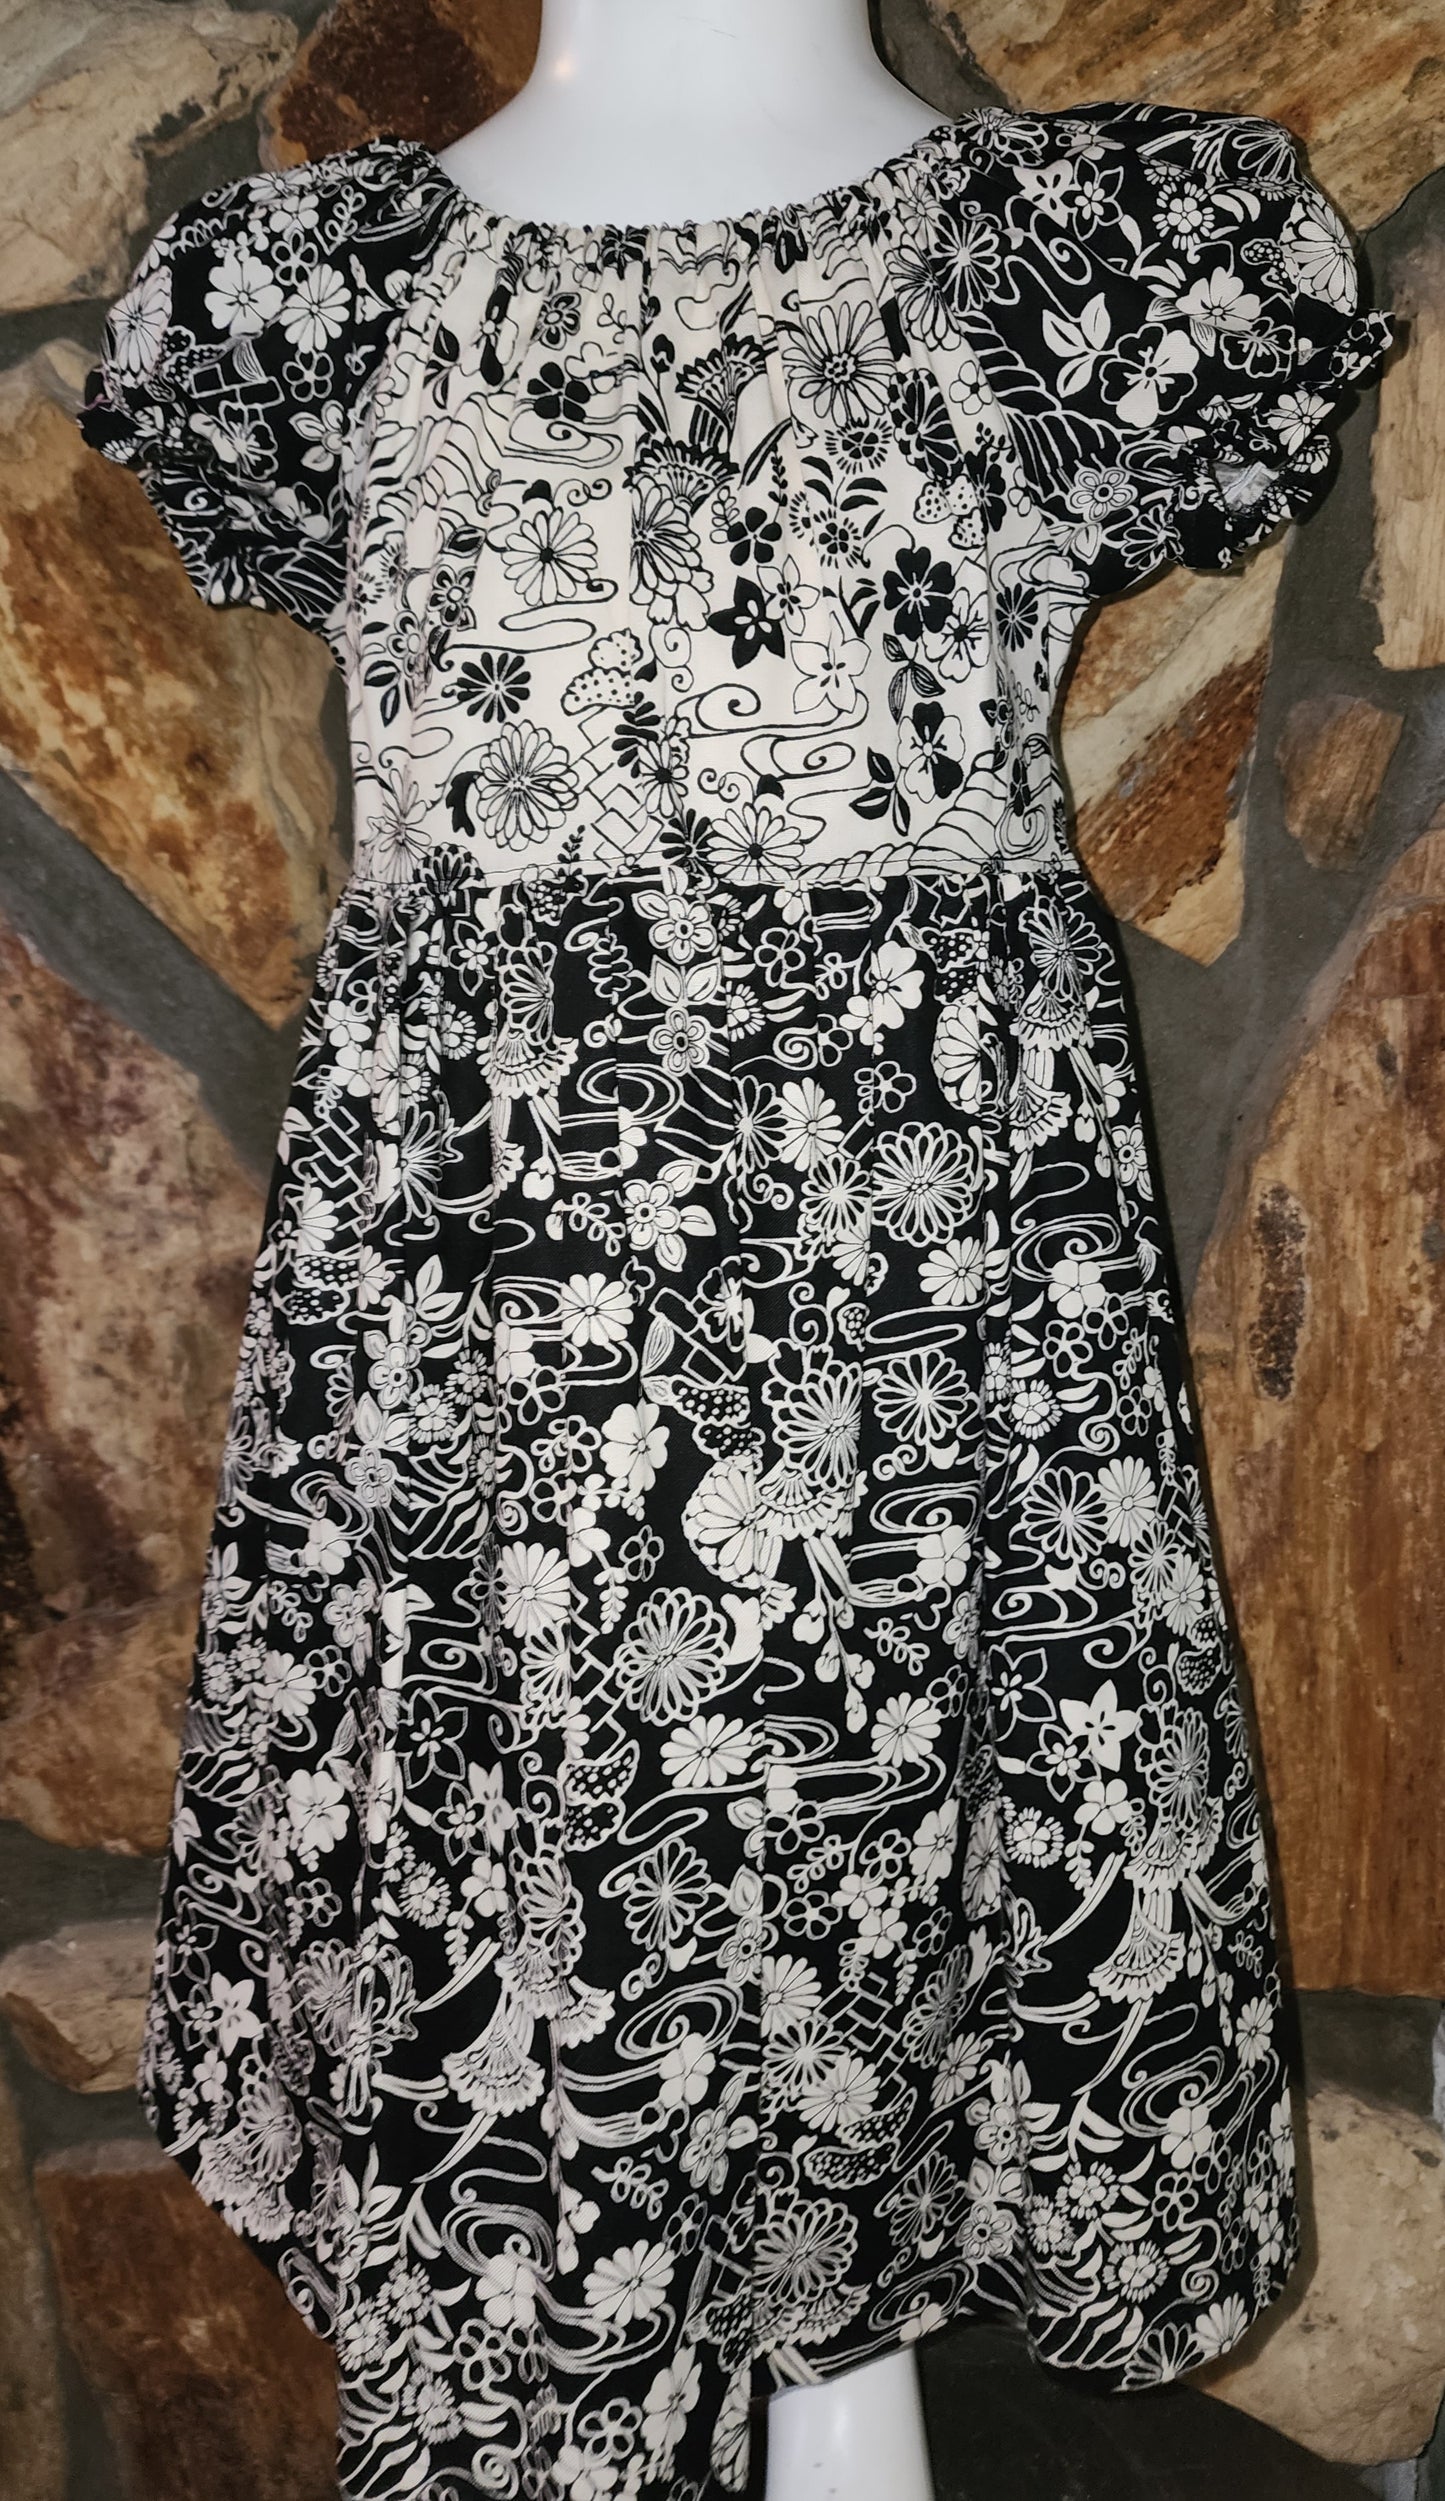 Damask Flower Black and Creme Dress Size 4